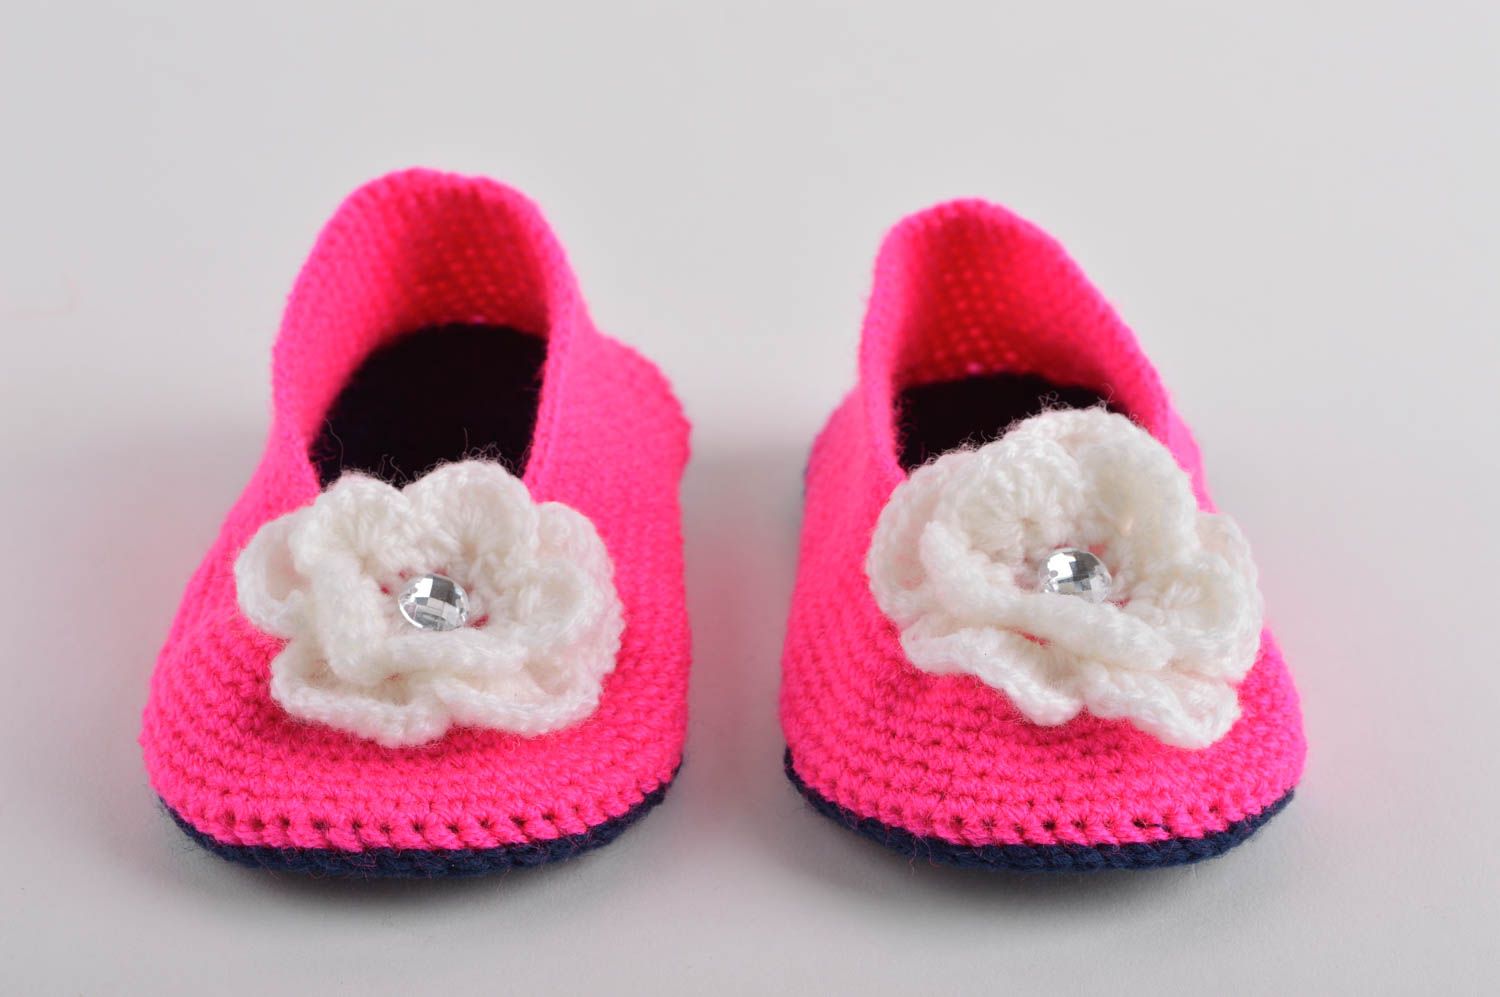 Handmade crocheted pink slippers unusual warm footwear home slippers for kids photo 3